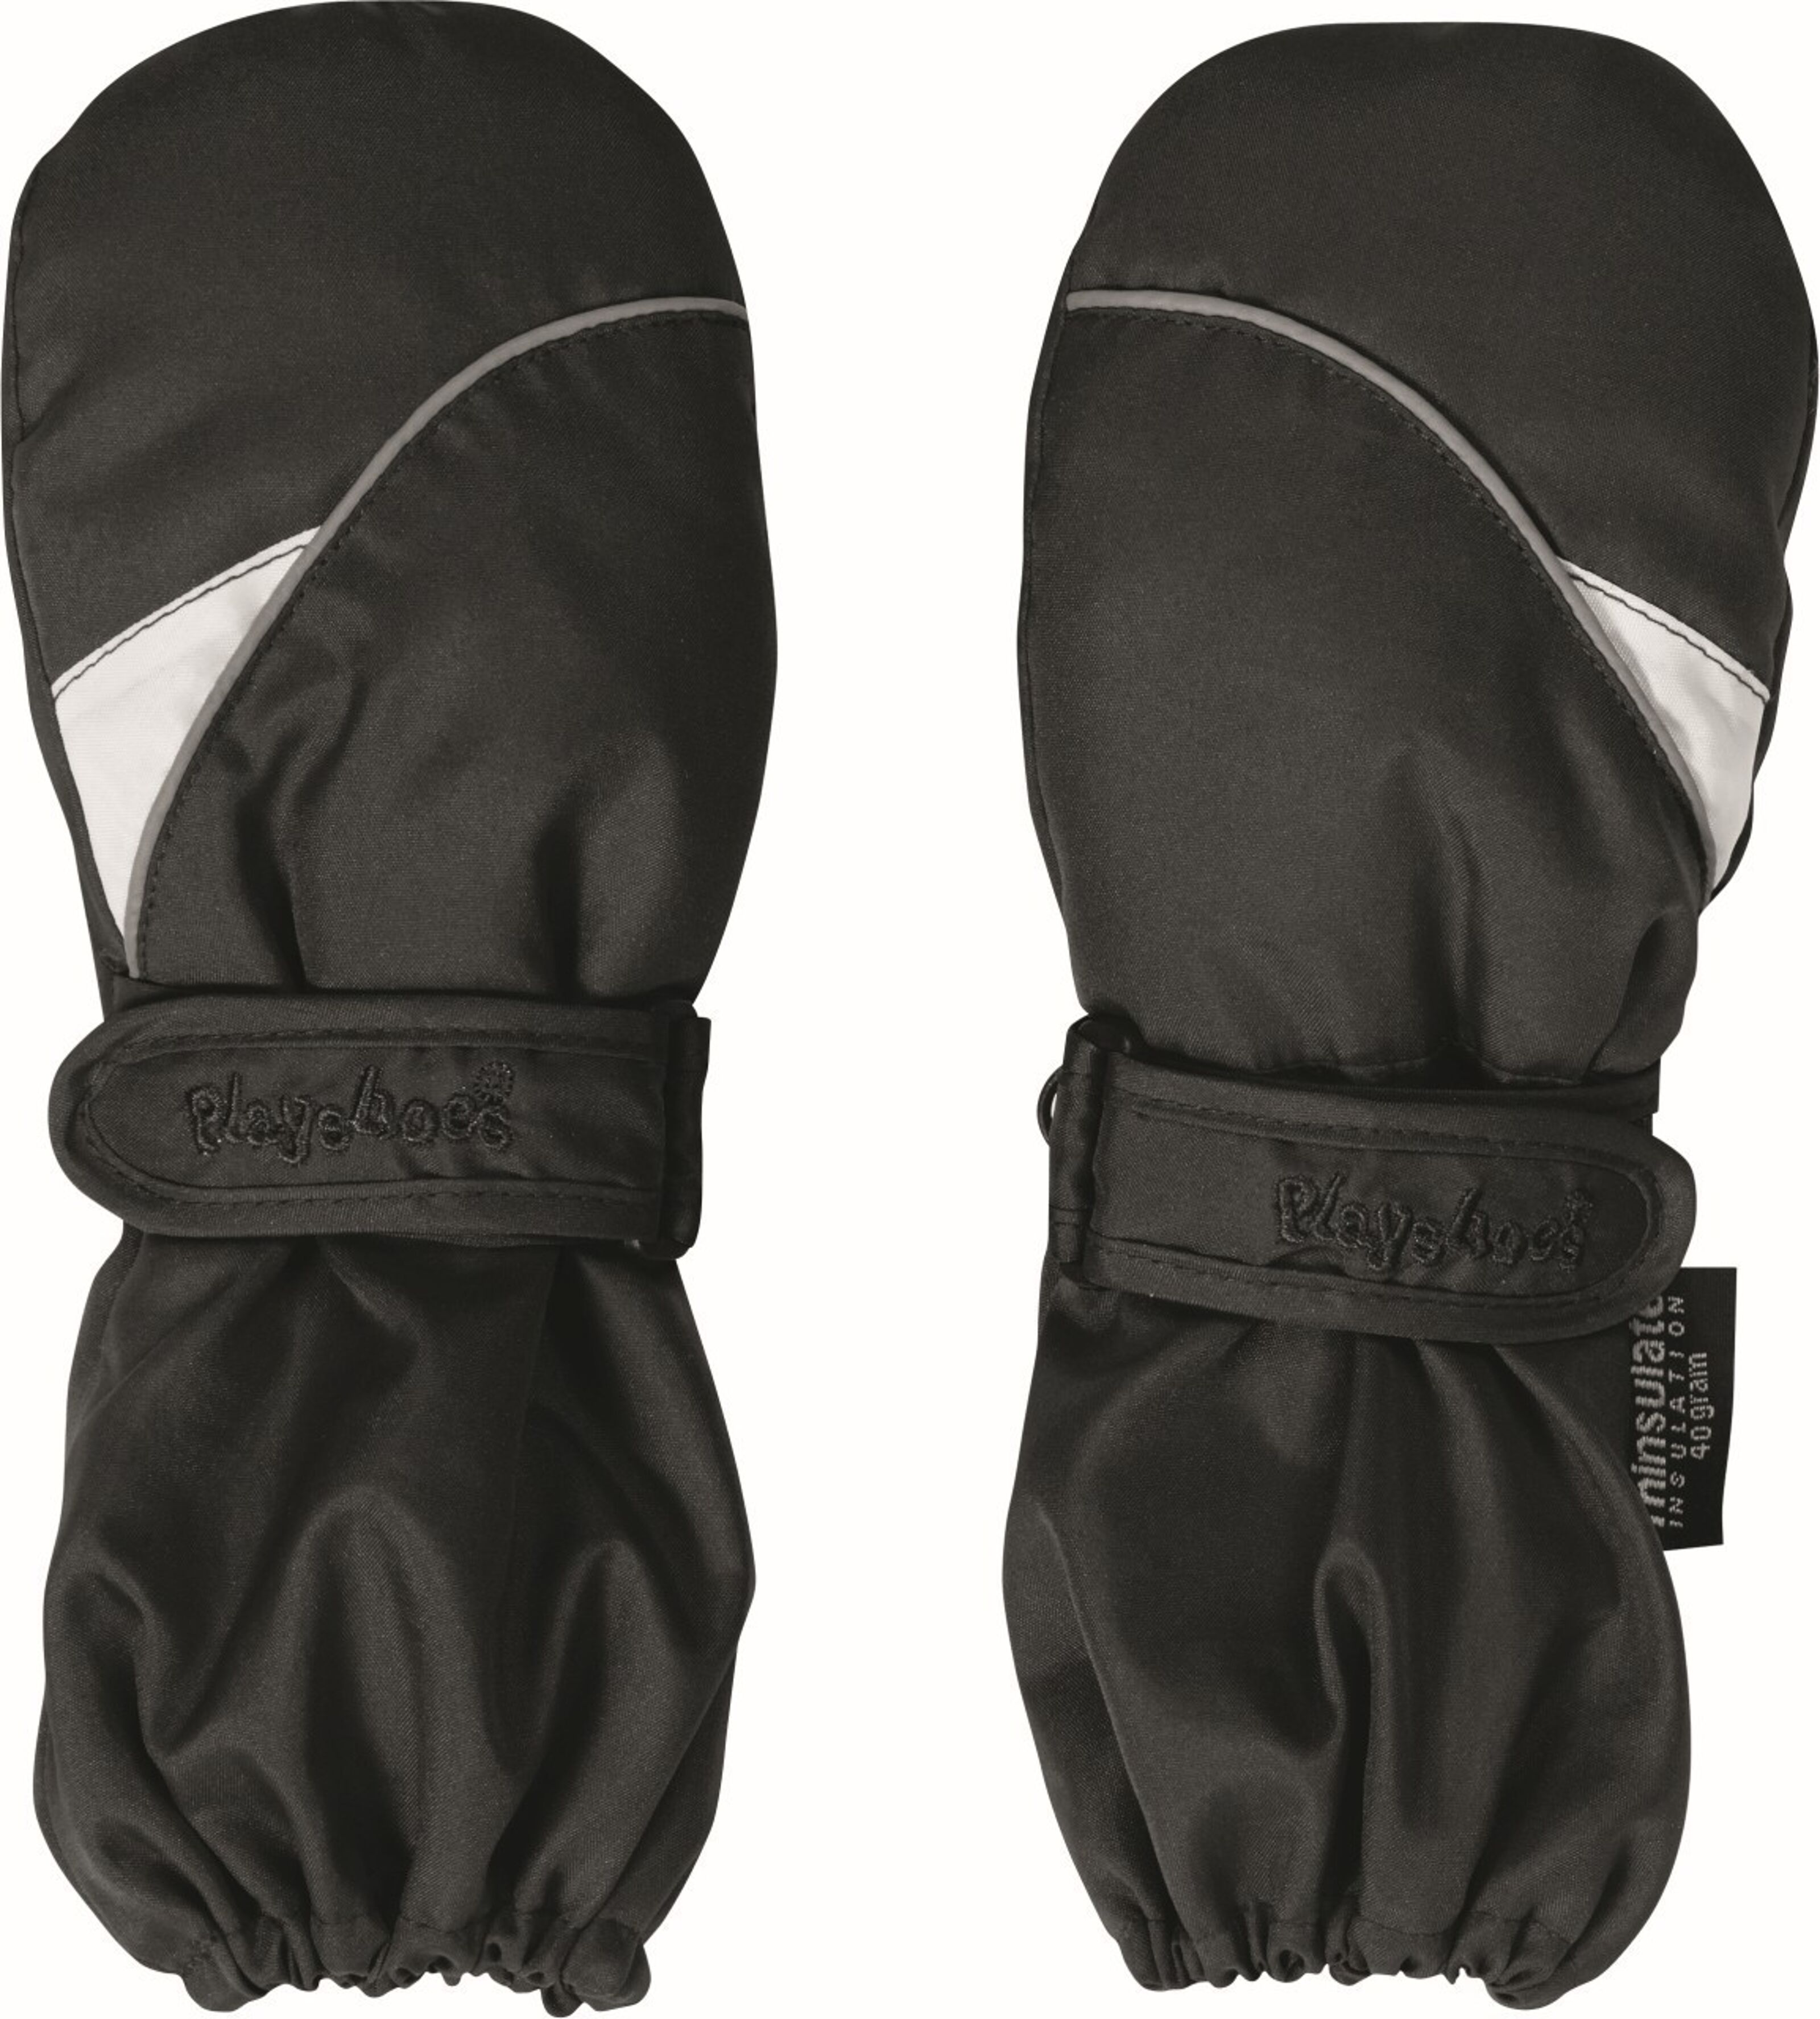 Buy Mitten -black wholesale glove